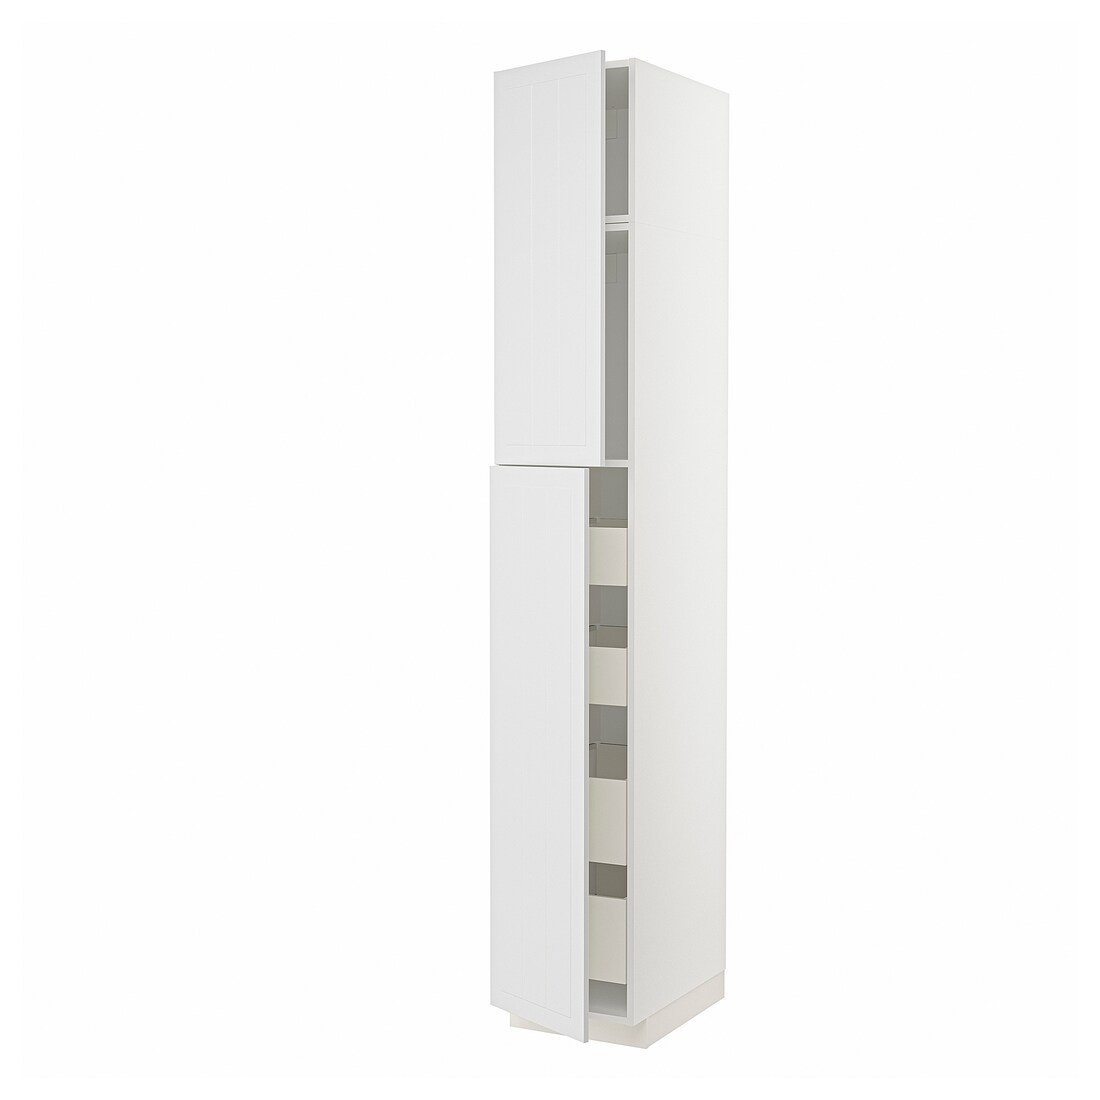 IKEA METOD МЕТОД / MAXIMERA МАКСИМЕРА Шкаф высокий 2 двери / 4 ящика, белый / Stensund белый, 40x60x240 см 79466048 | 794.660.48